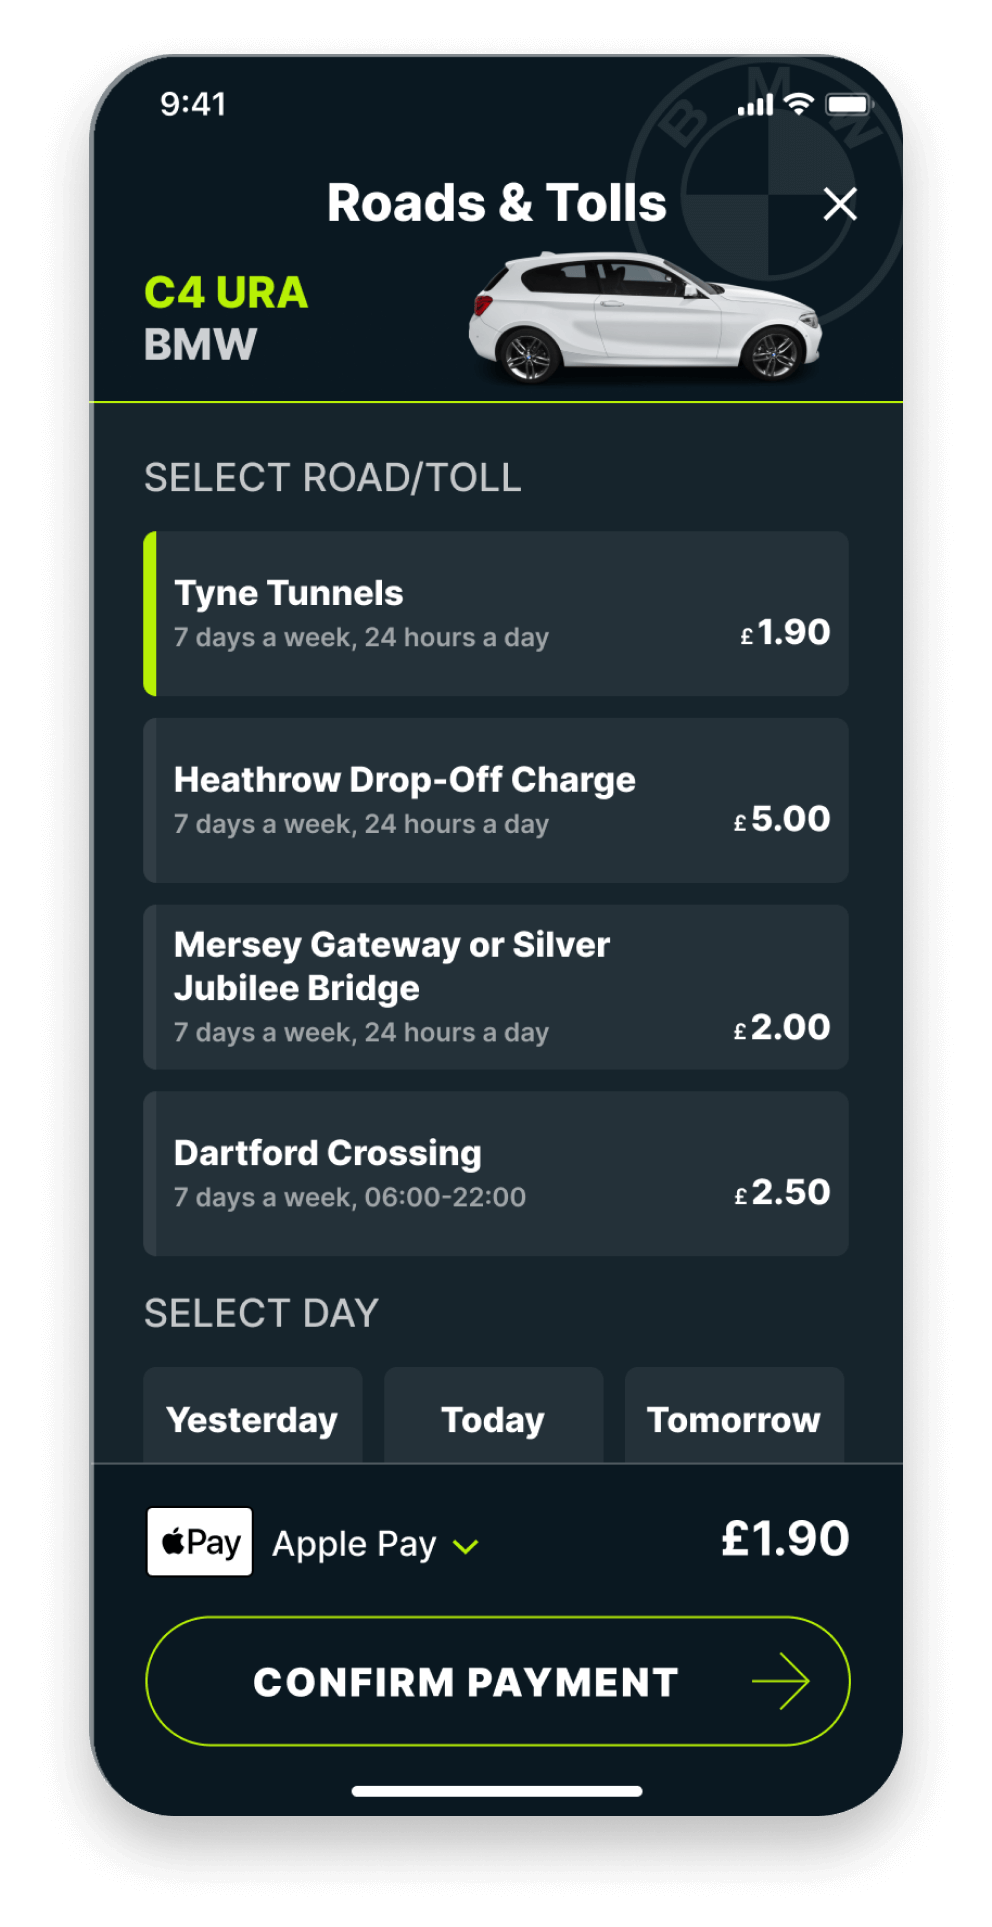 Tyne Tunnels payment screen on Caura app